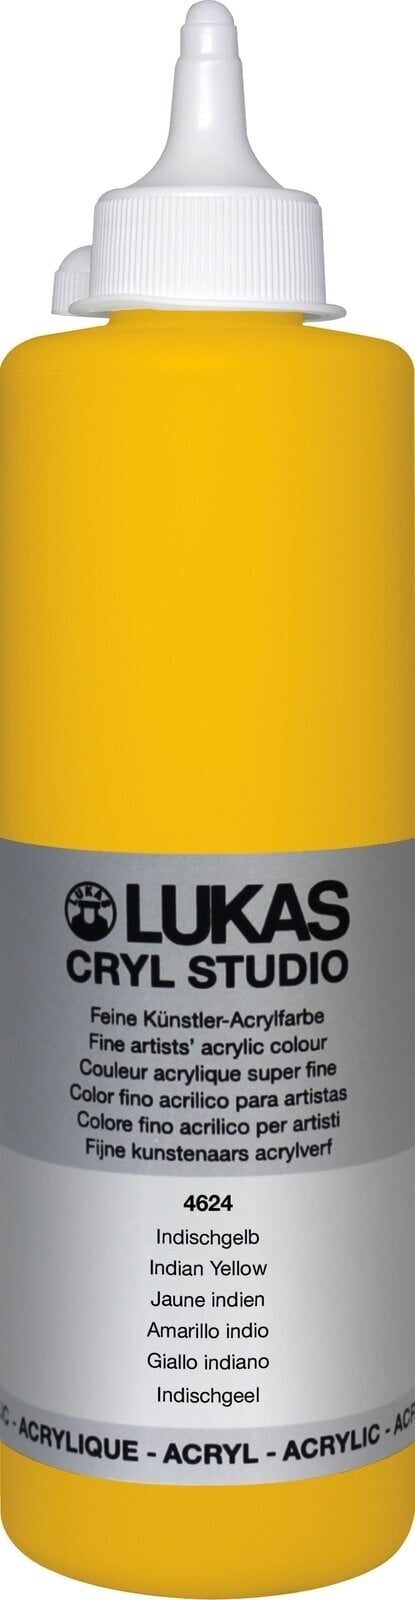 Farba akrylowa Lukas Cryl Studio Acrylic Paint Plastic Bottle Farba akrylowa Indian Yellow 500 ml 1 szt